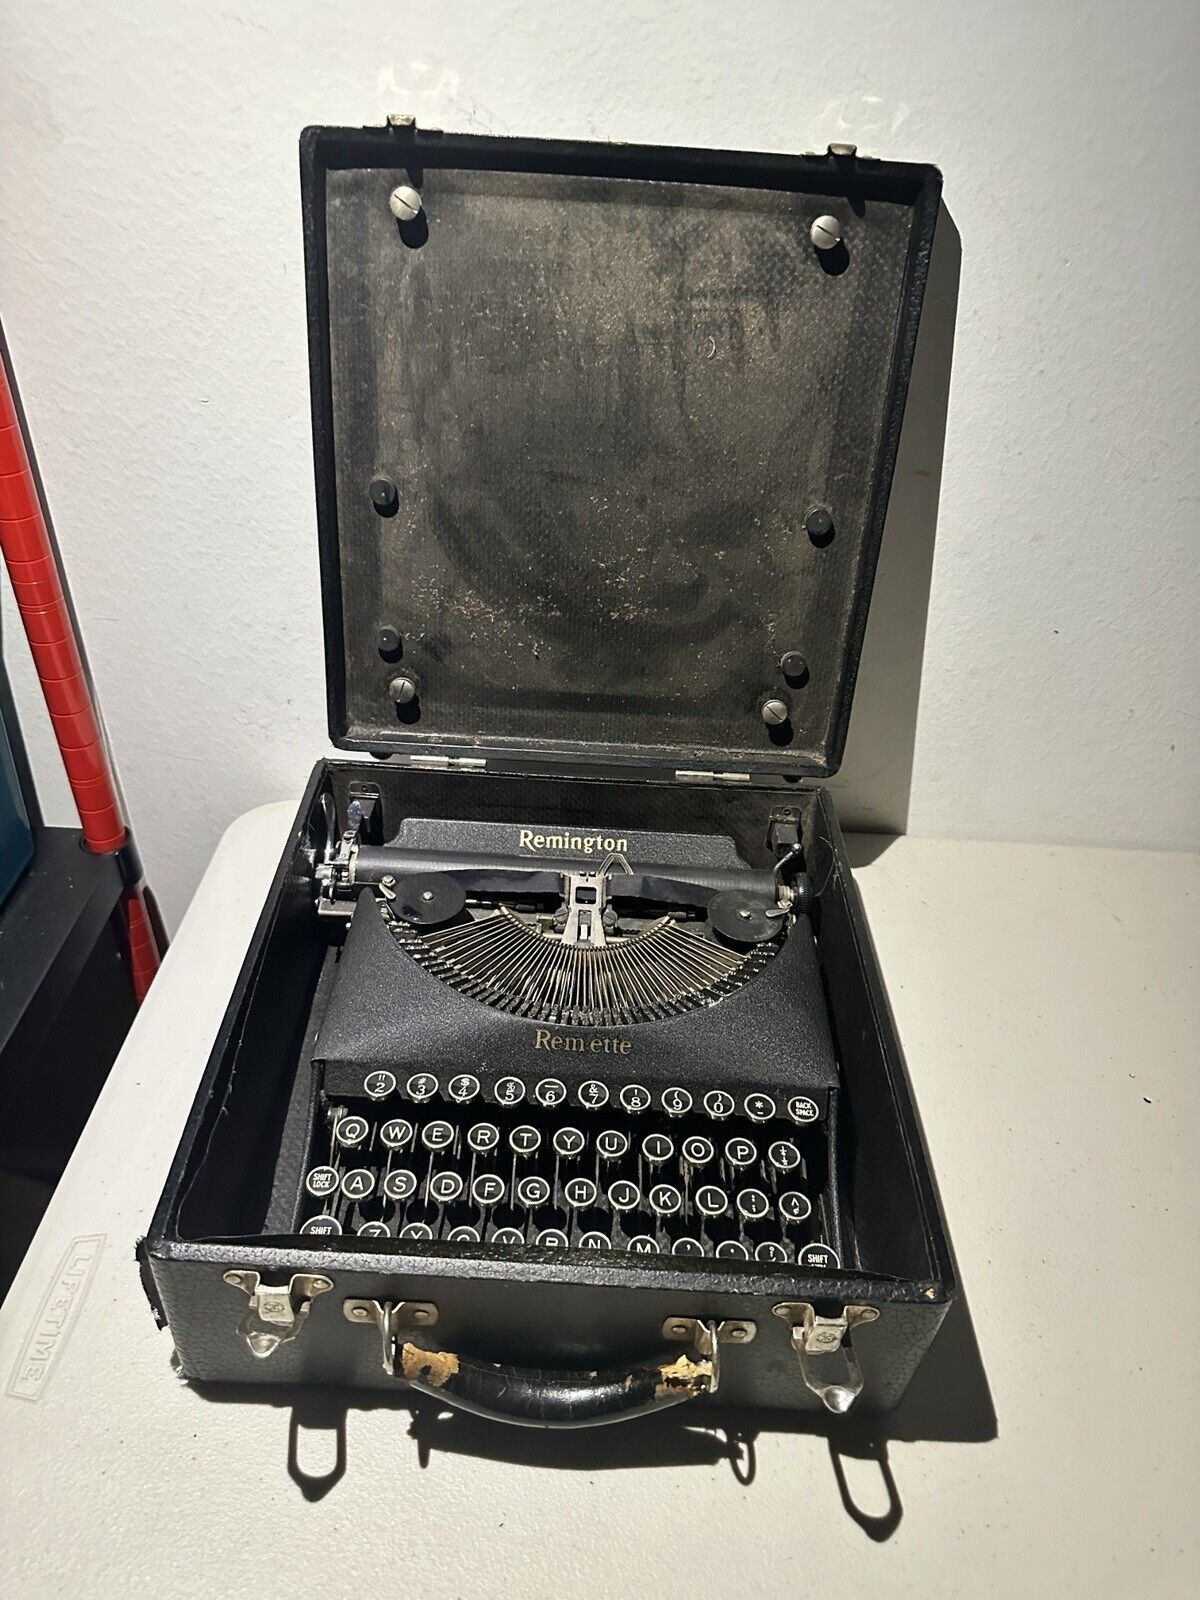 Vintage Remington REM-ETTE Remette Portable Typewriter w/Case